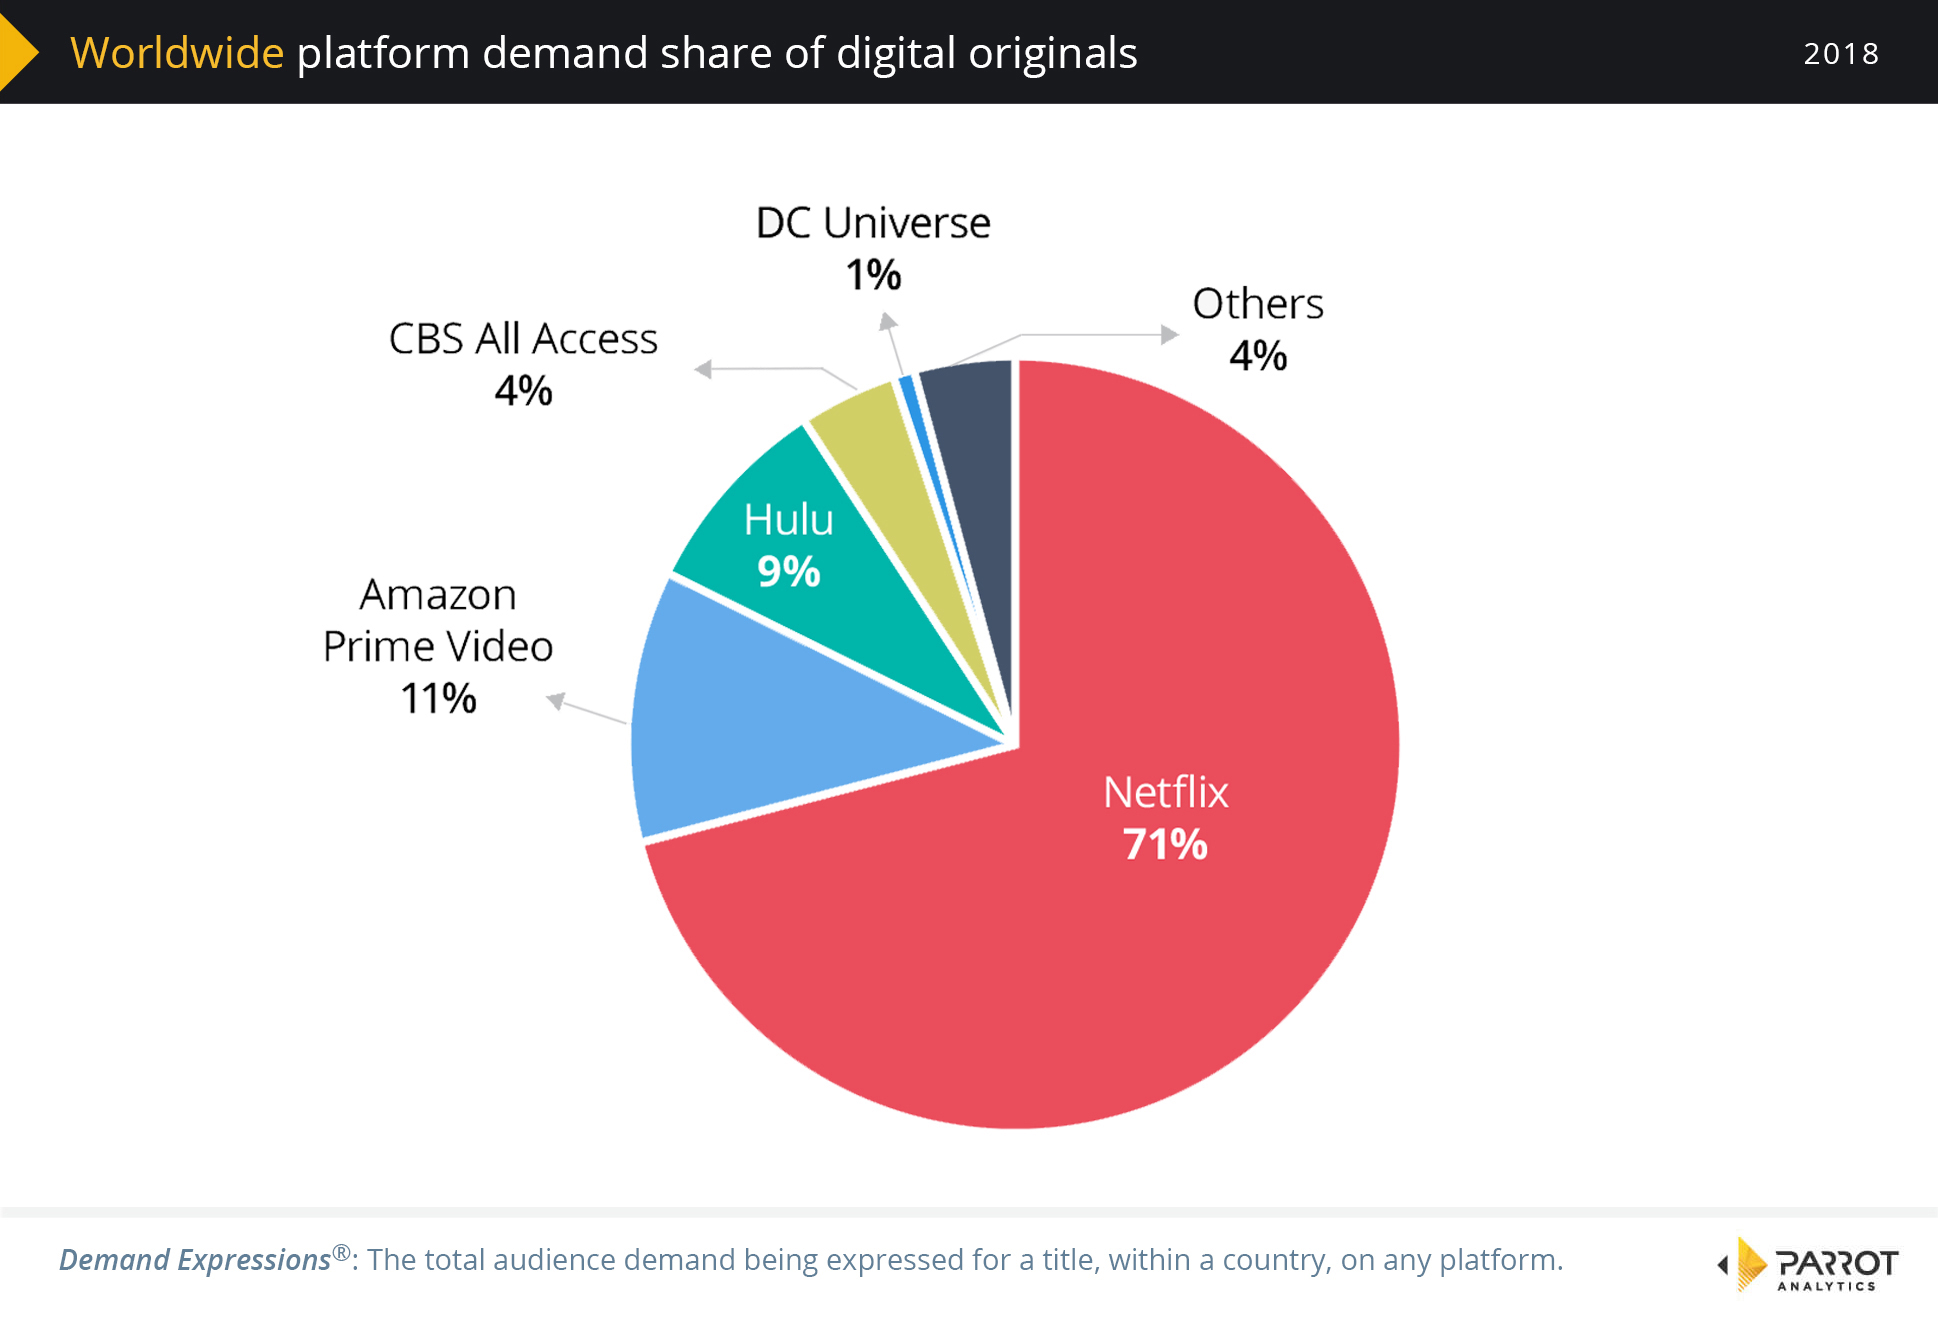 global video on demand market